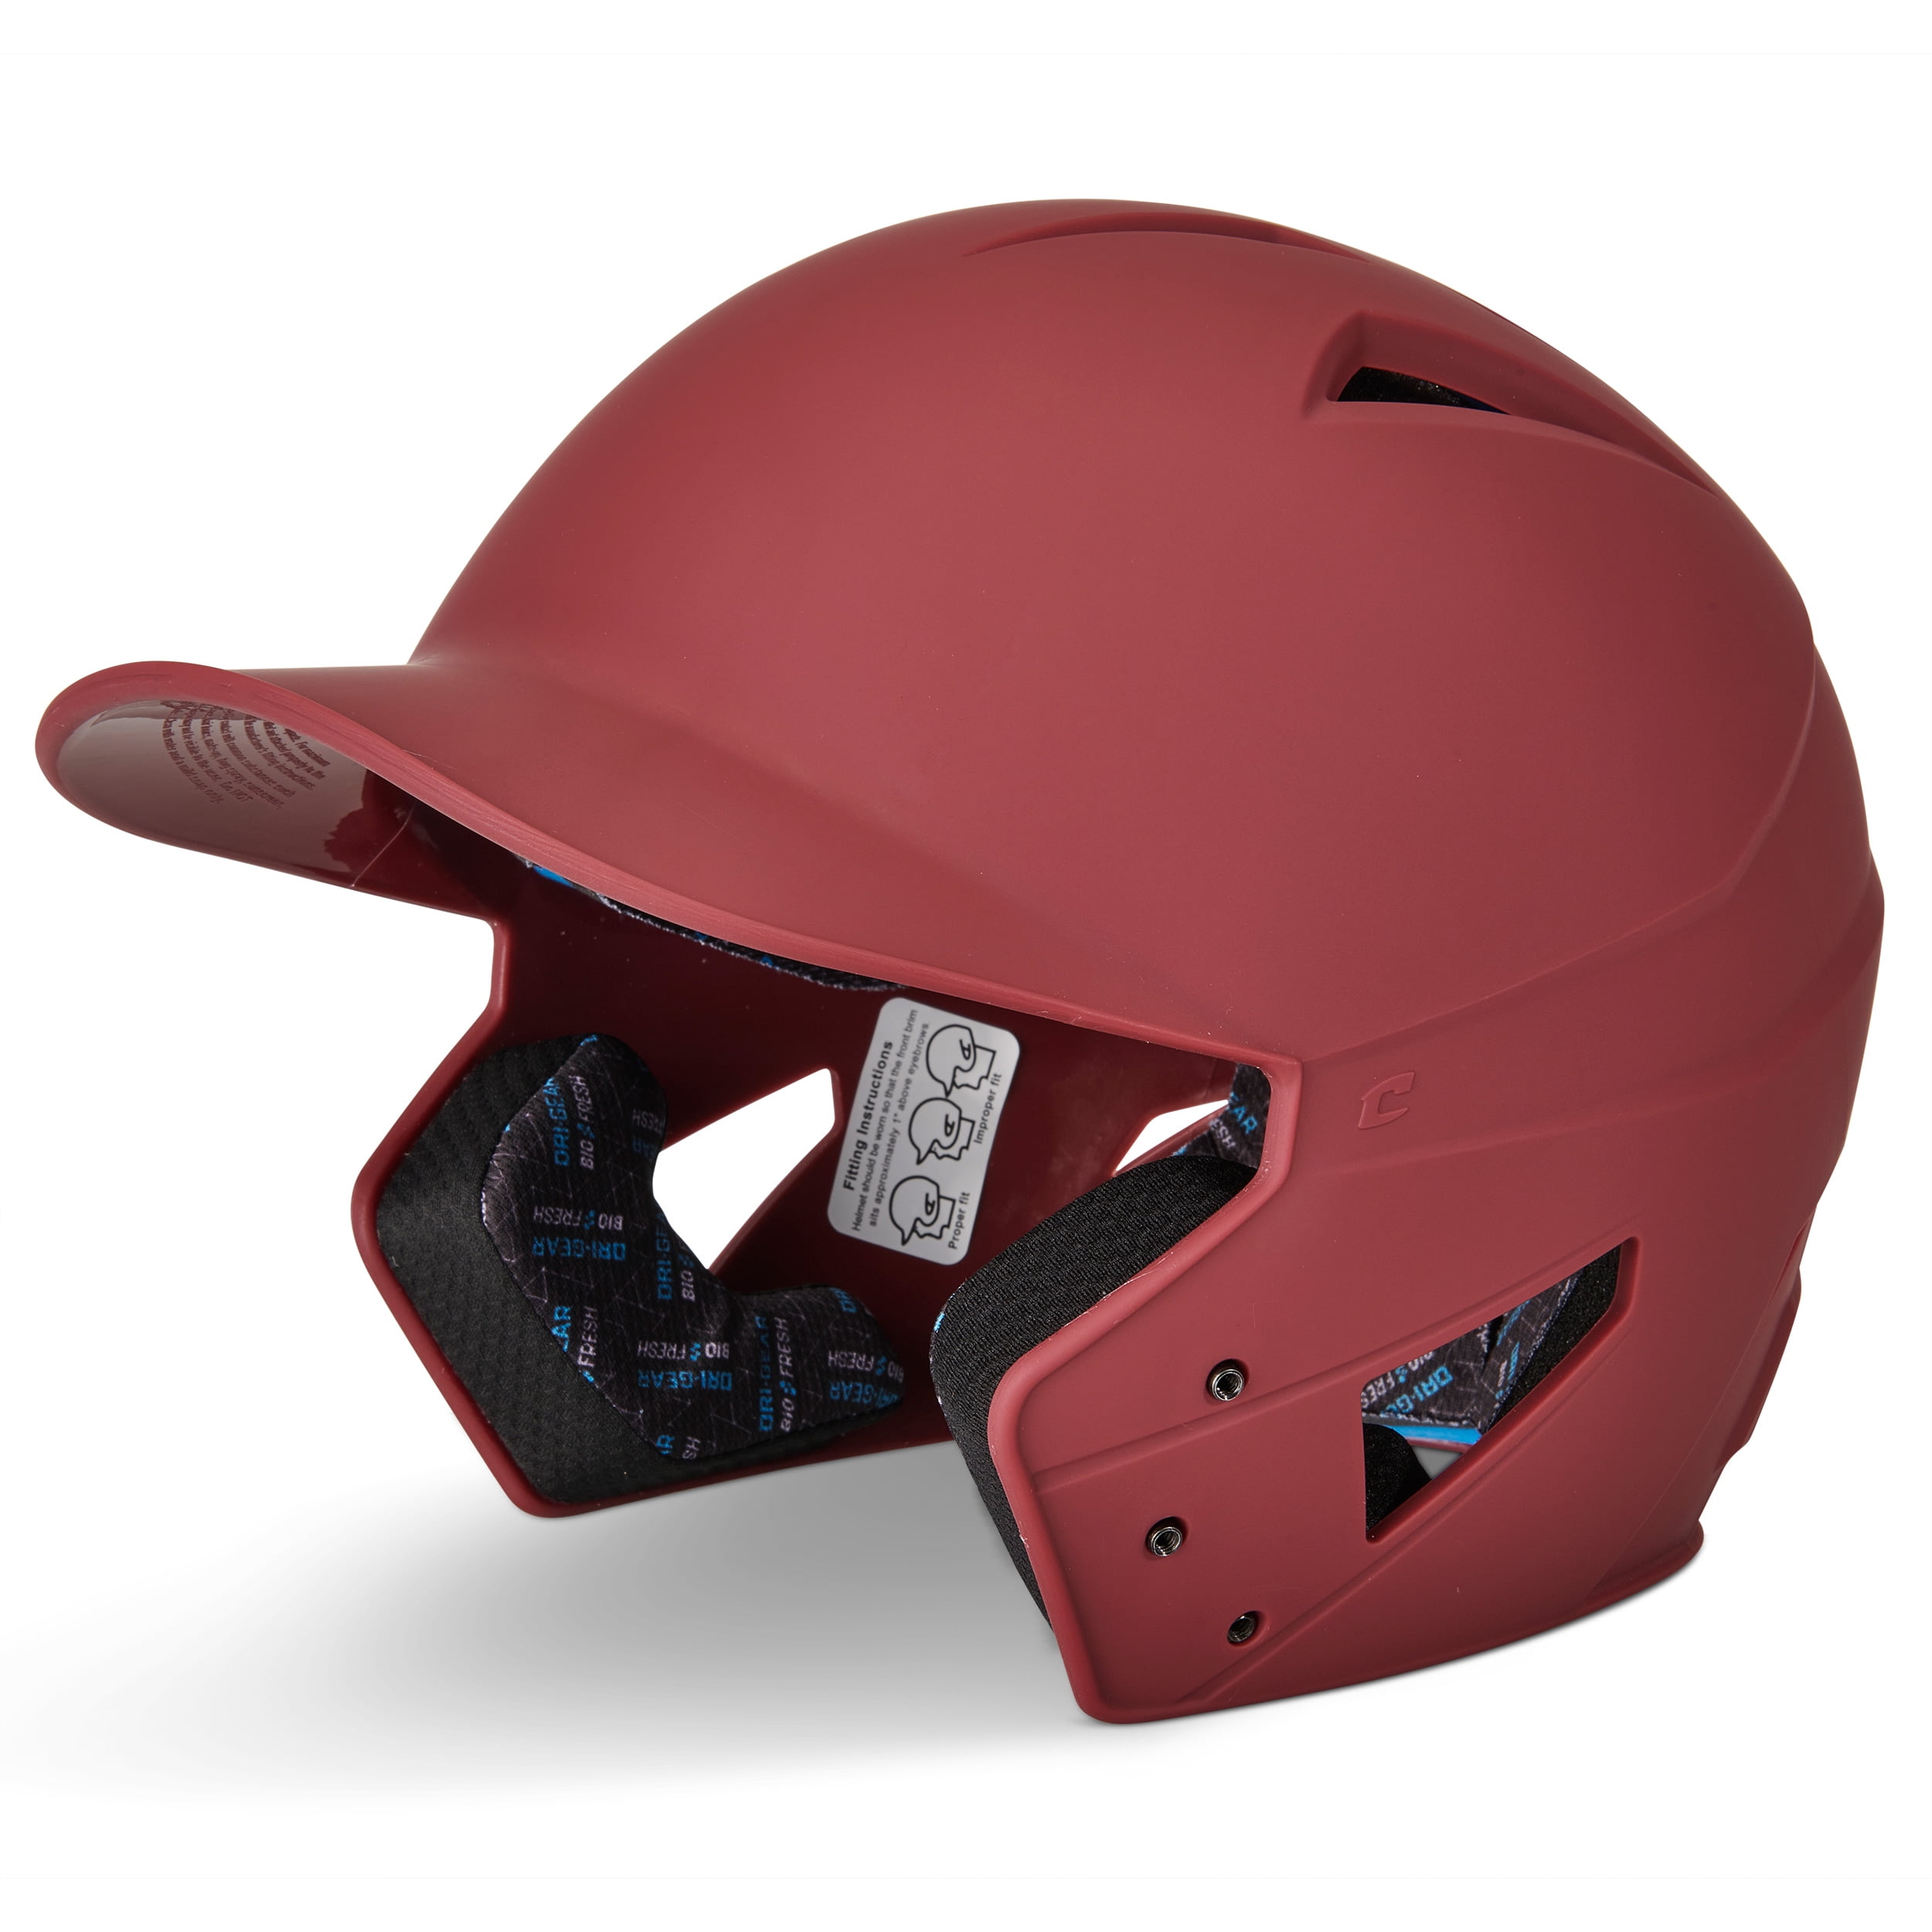 C Flap Batting Helmet FACE Protector GUARD Baseball Softball Right Handed Batter 